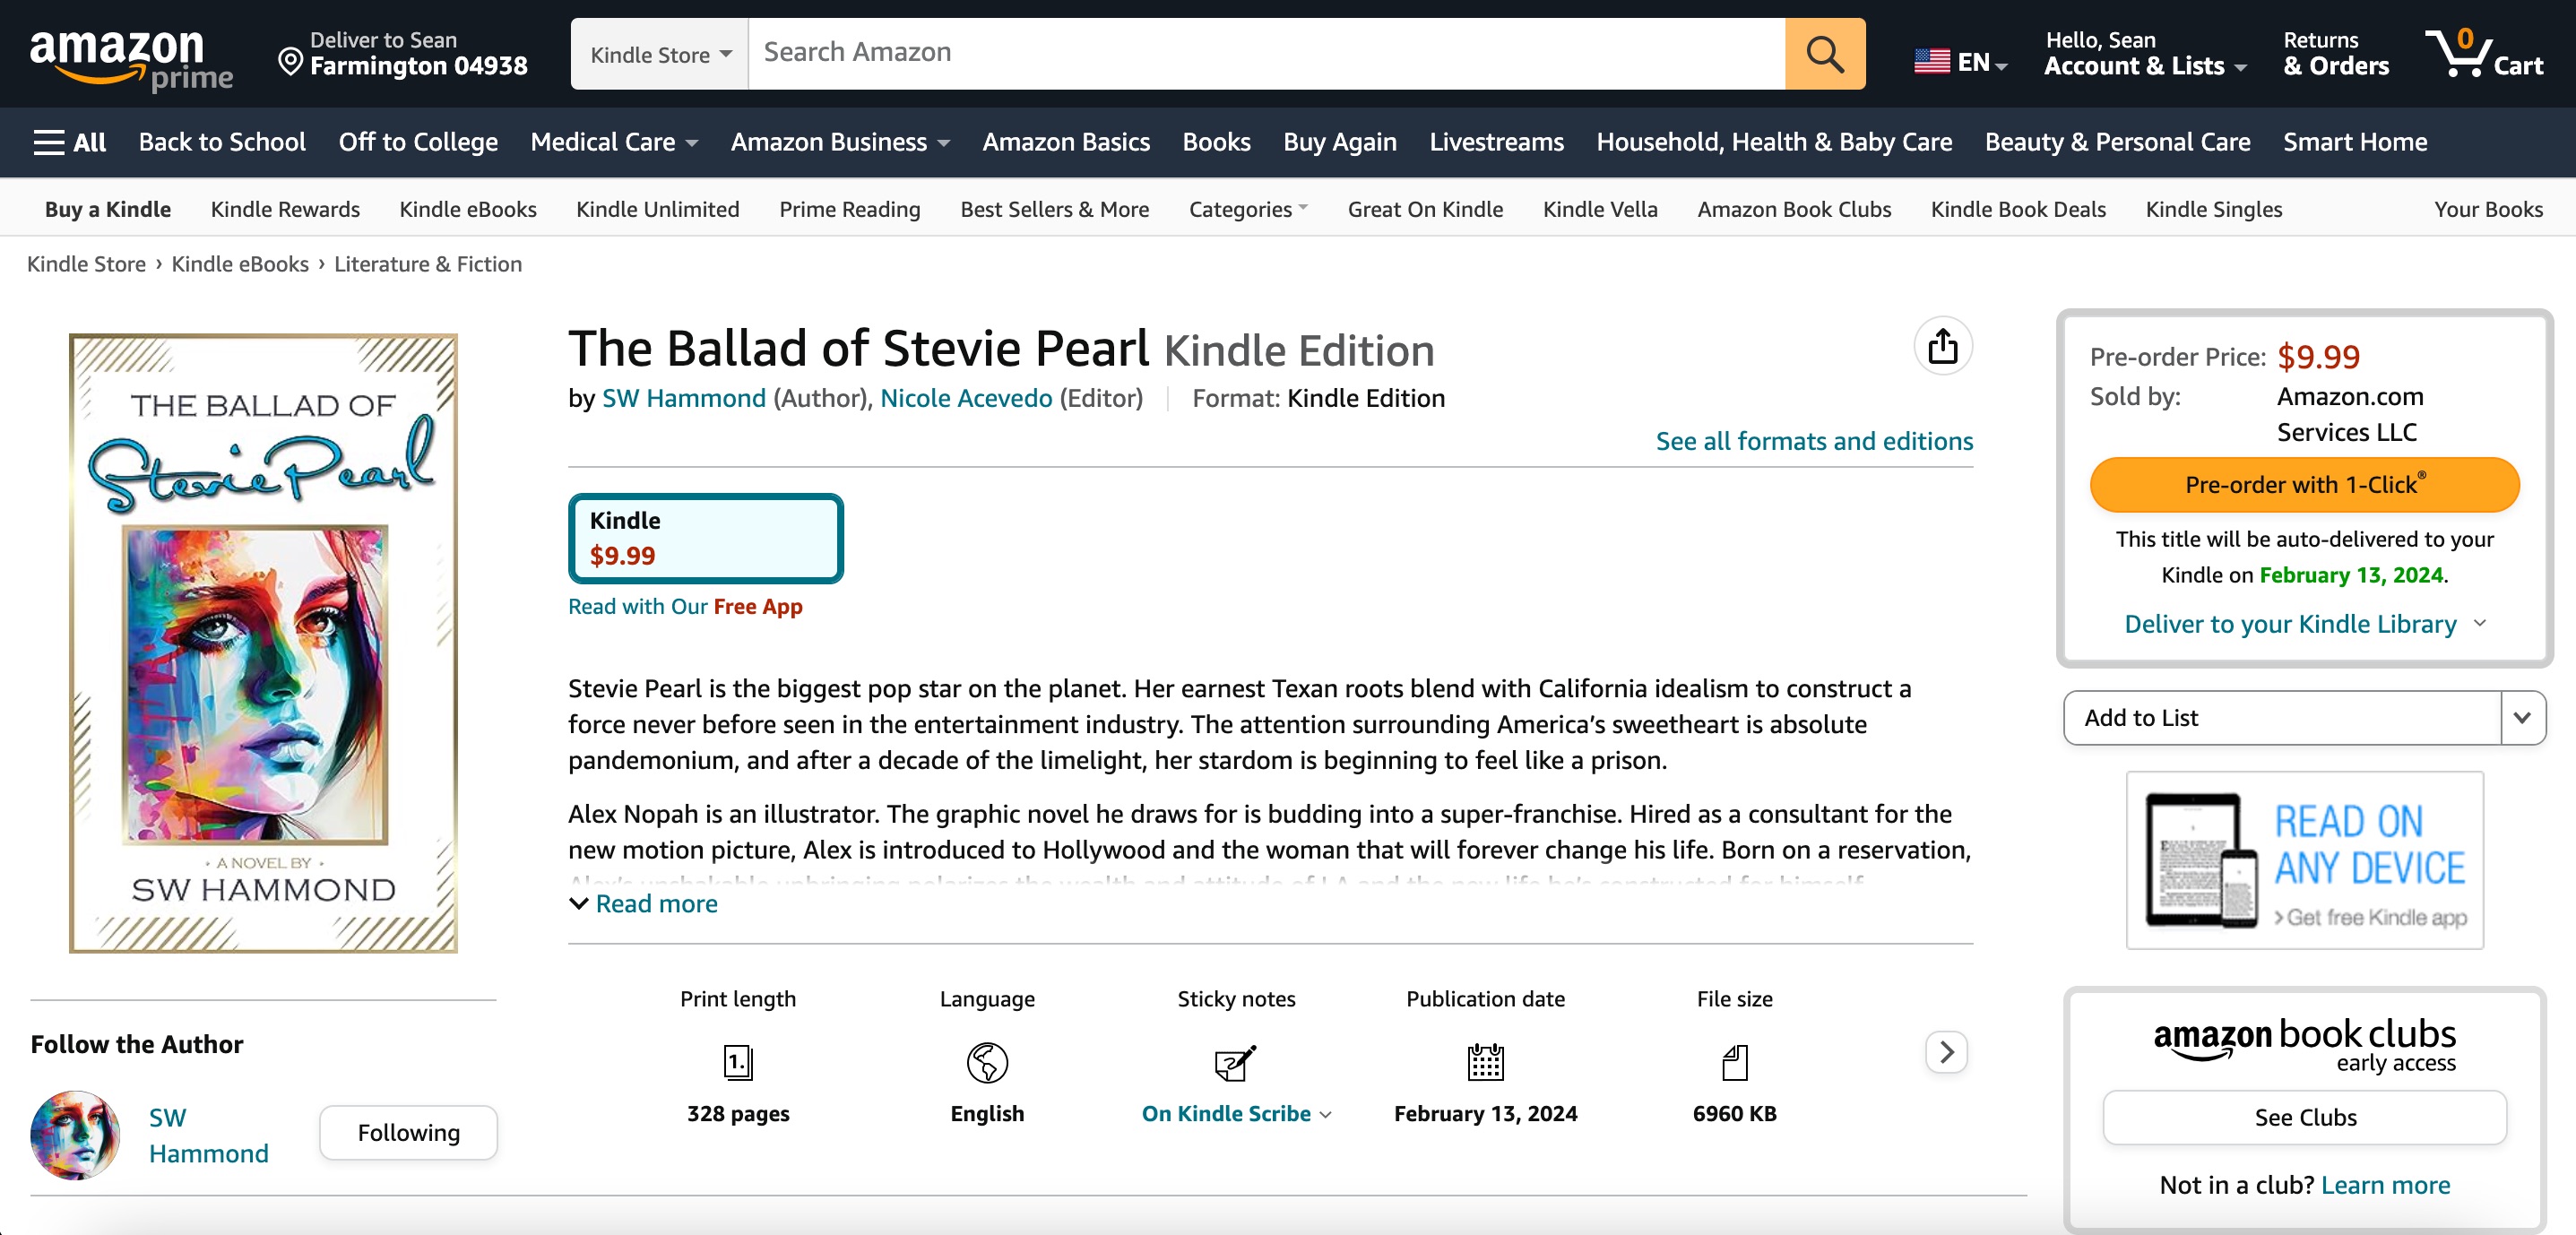 The Ballad of Stevie Pearl on Amazon